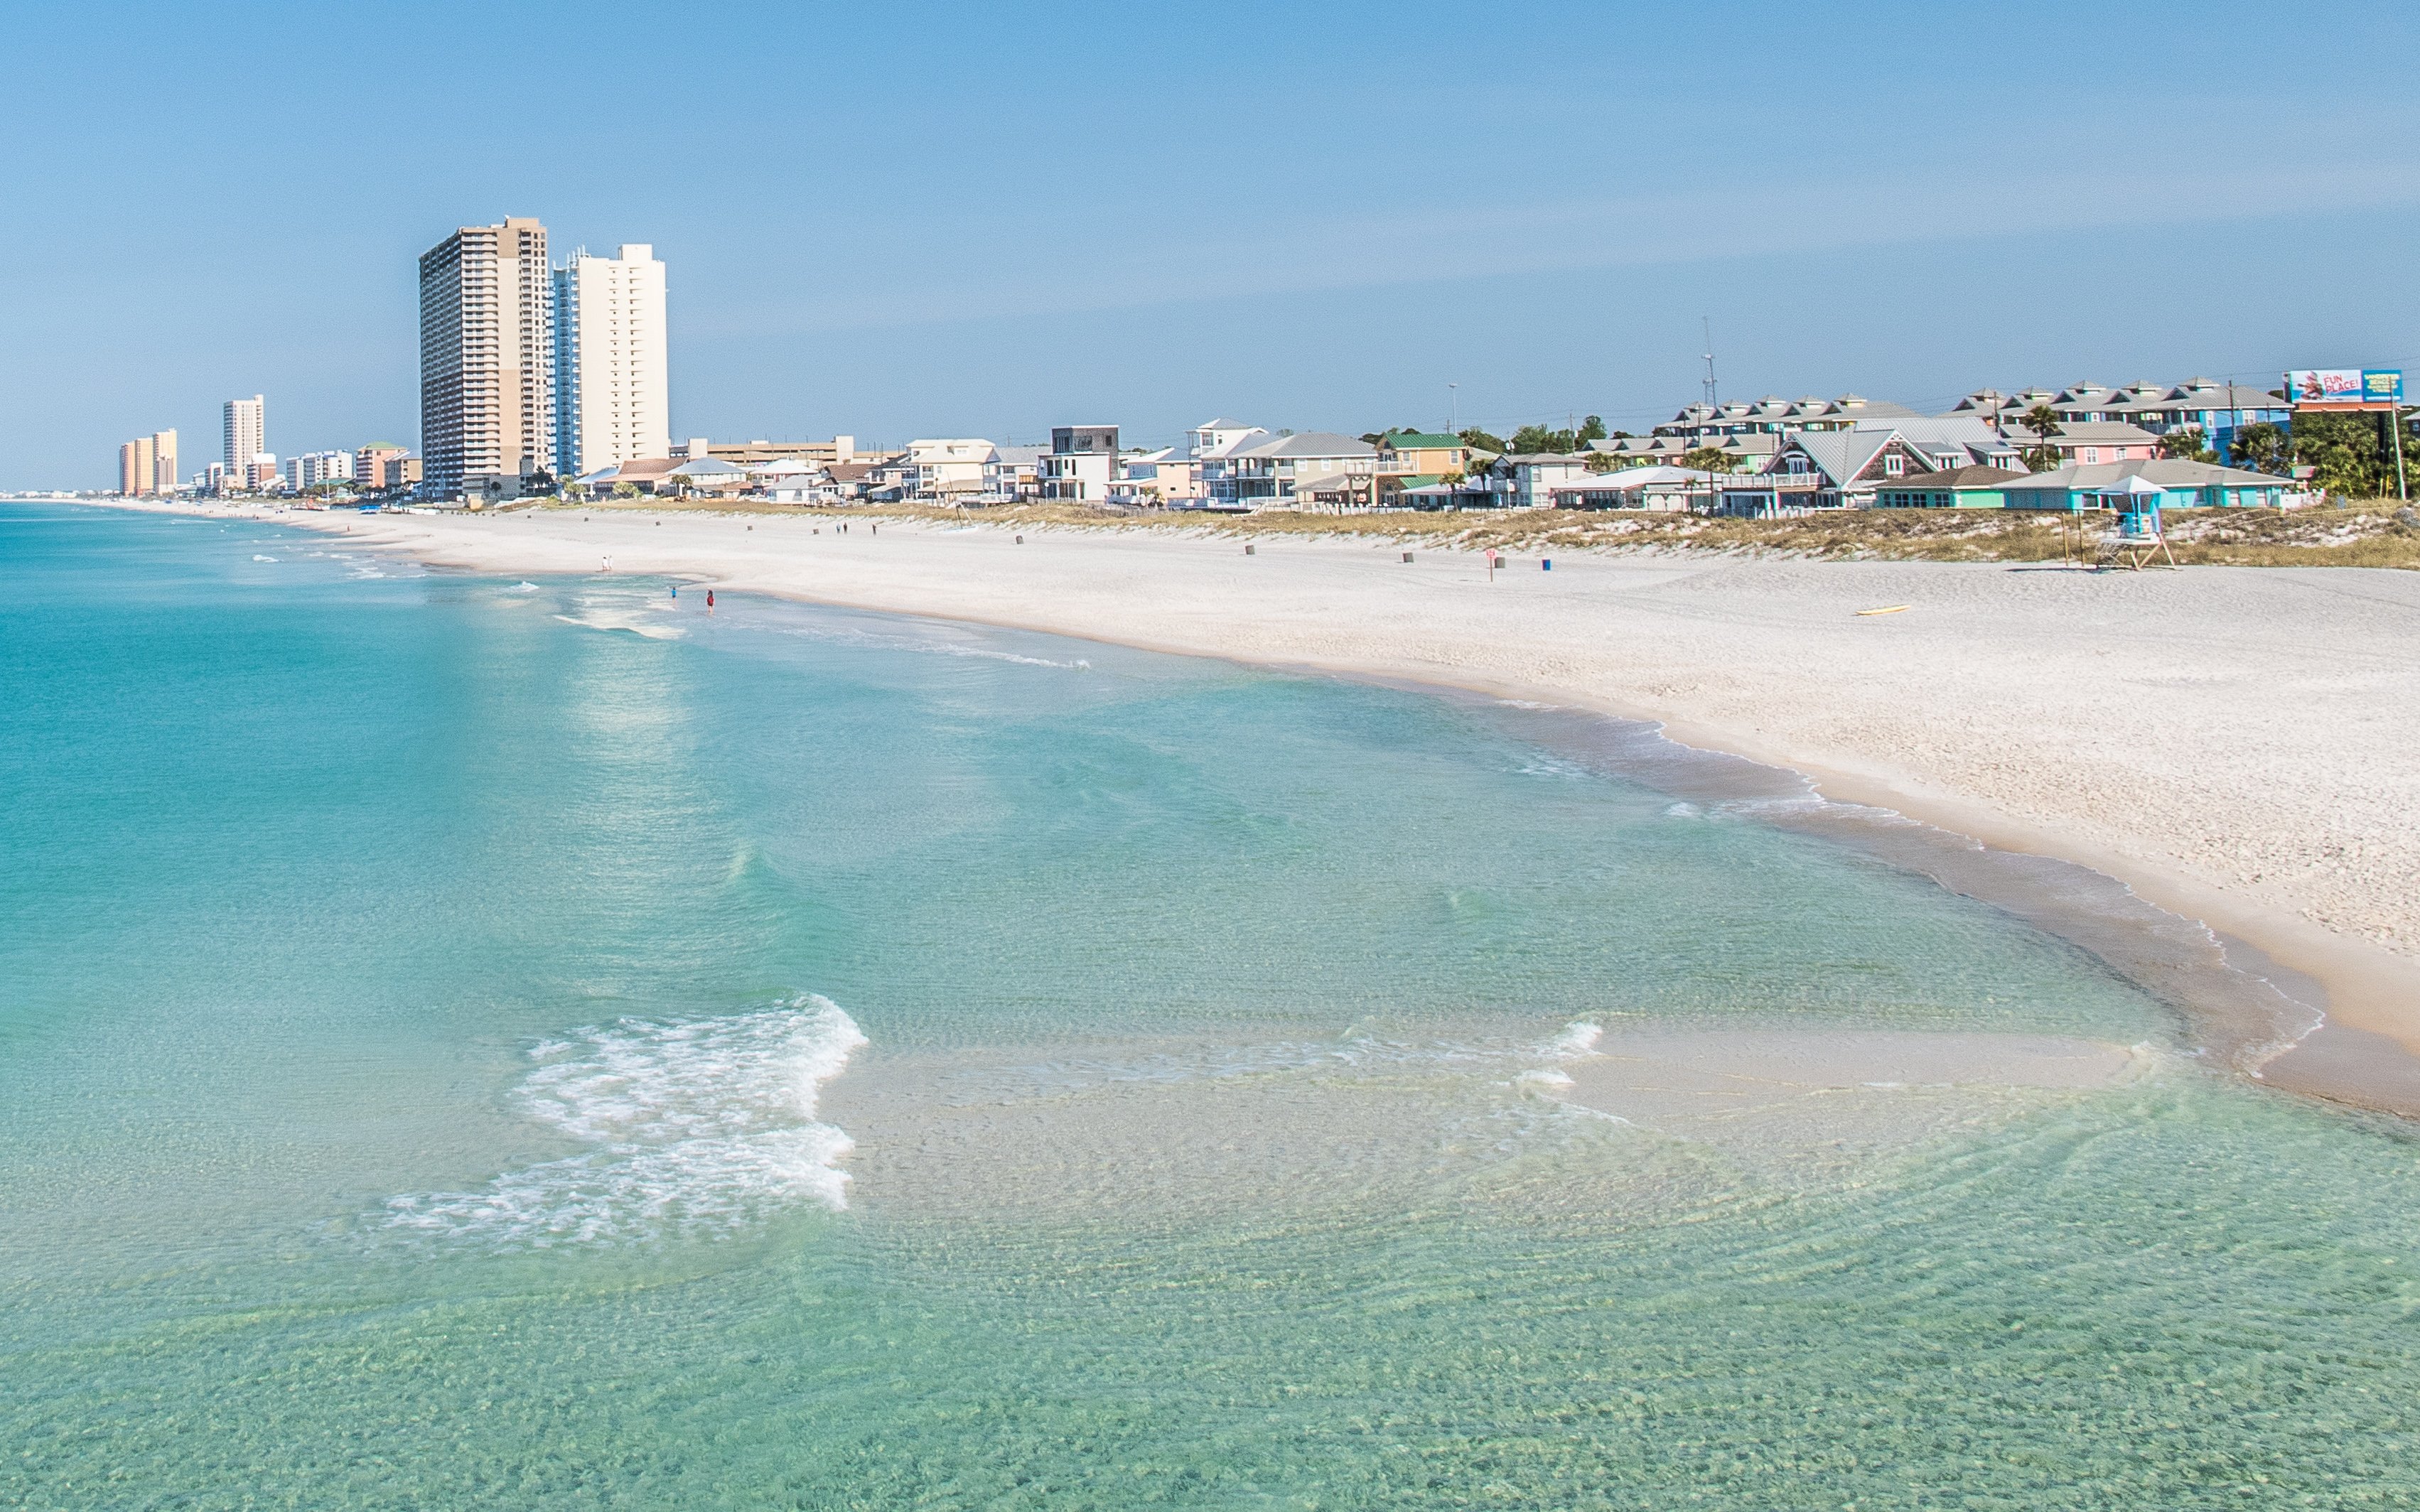 Visit Panama City Beach RV Resort In Florida RV LIFE